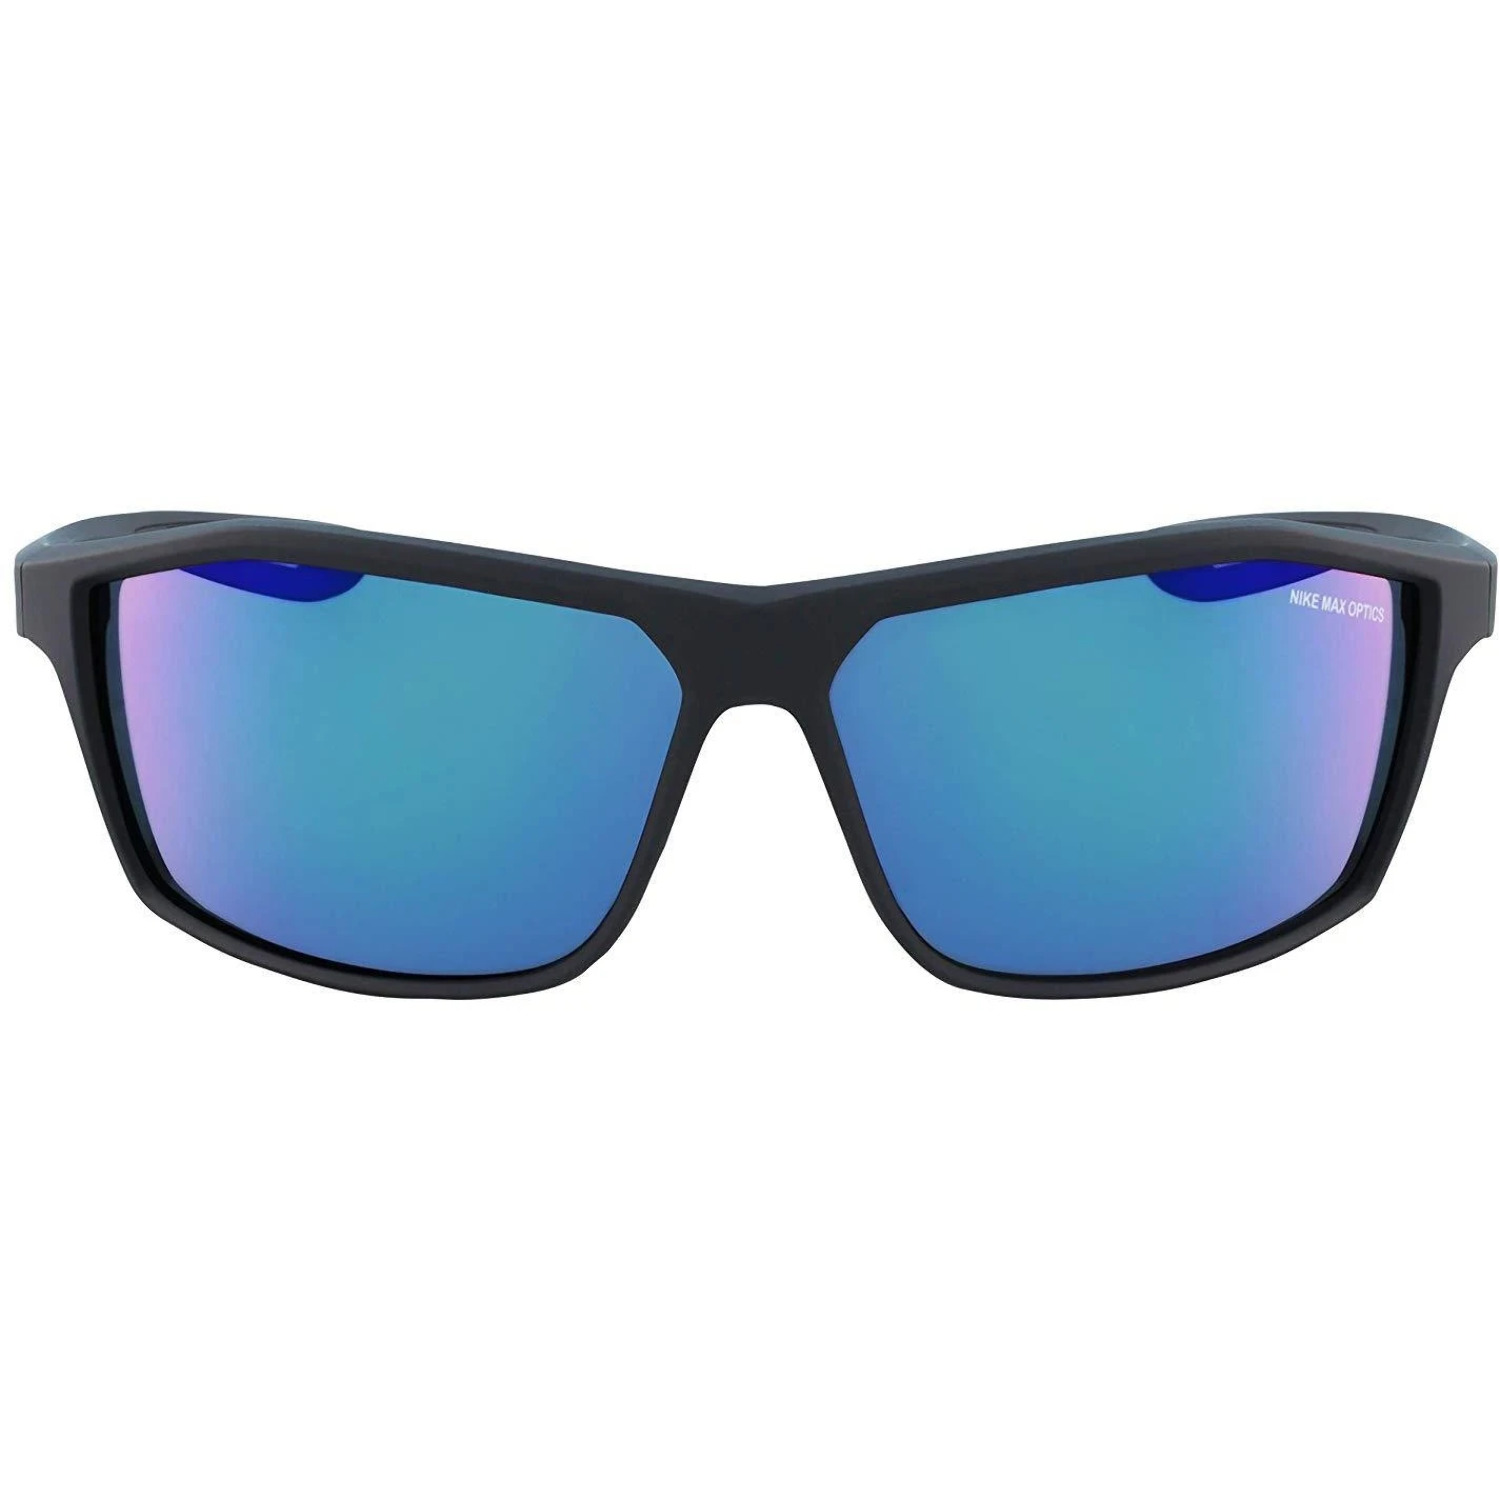 [EV1060-033] Mens Nike Intersect Sunglasses - image 3 of 5